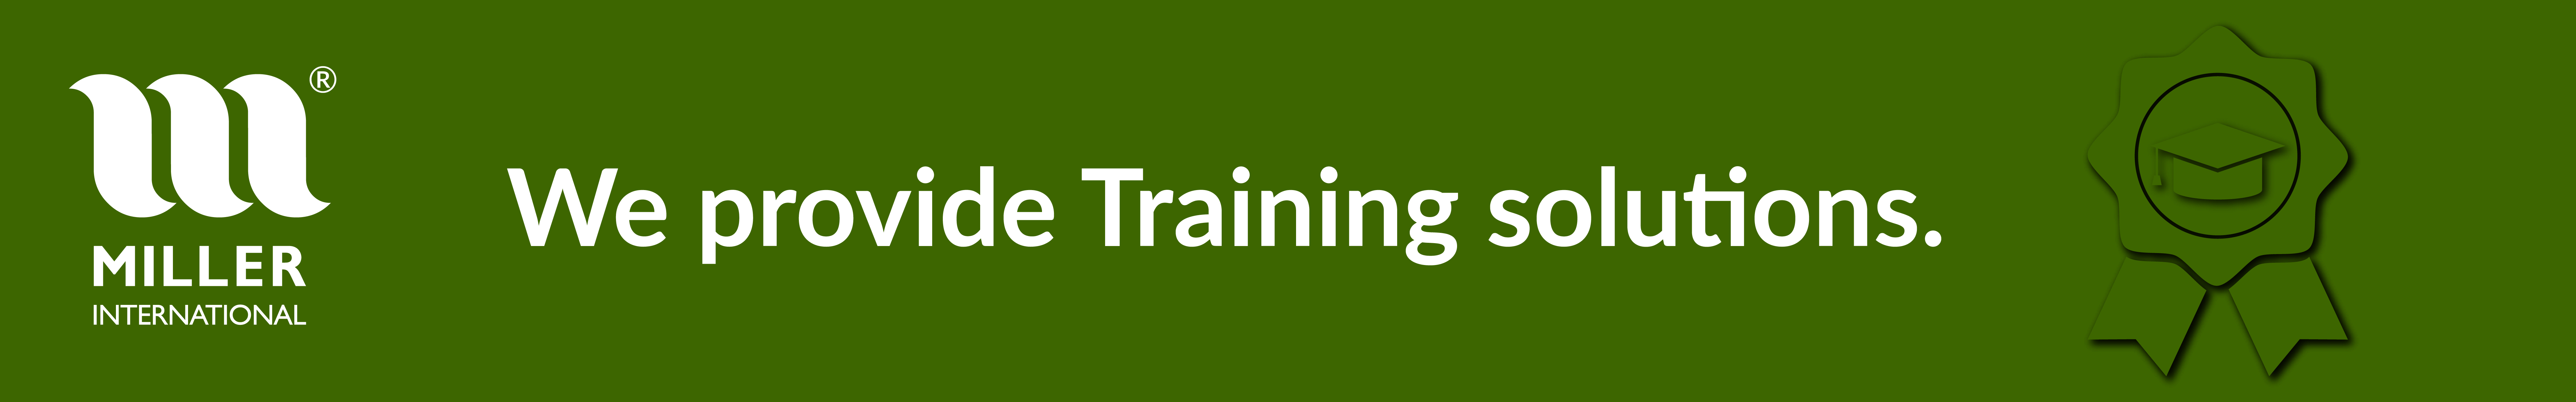 Training - Miller International